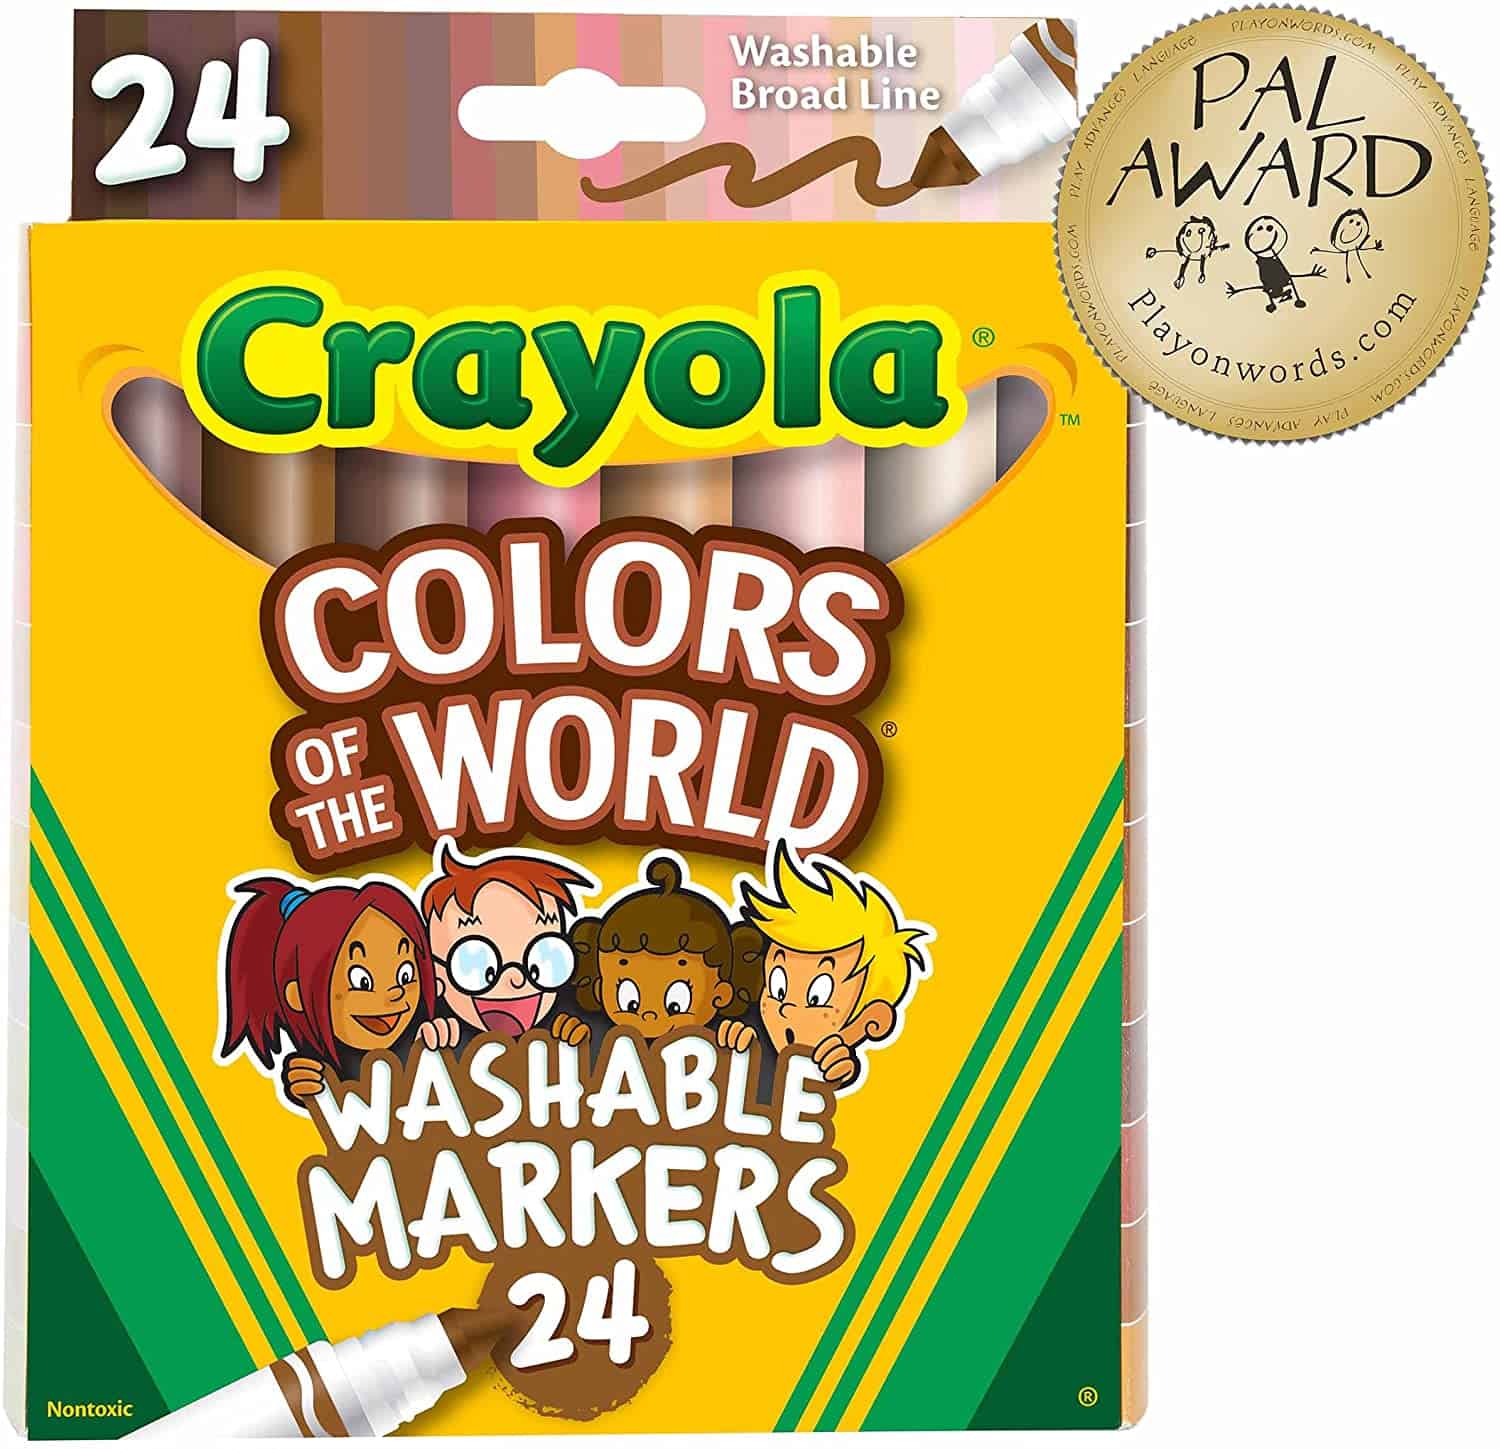 Crayola Paint Maker Mixer Kids Art Craft Gift Playset 